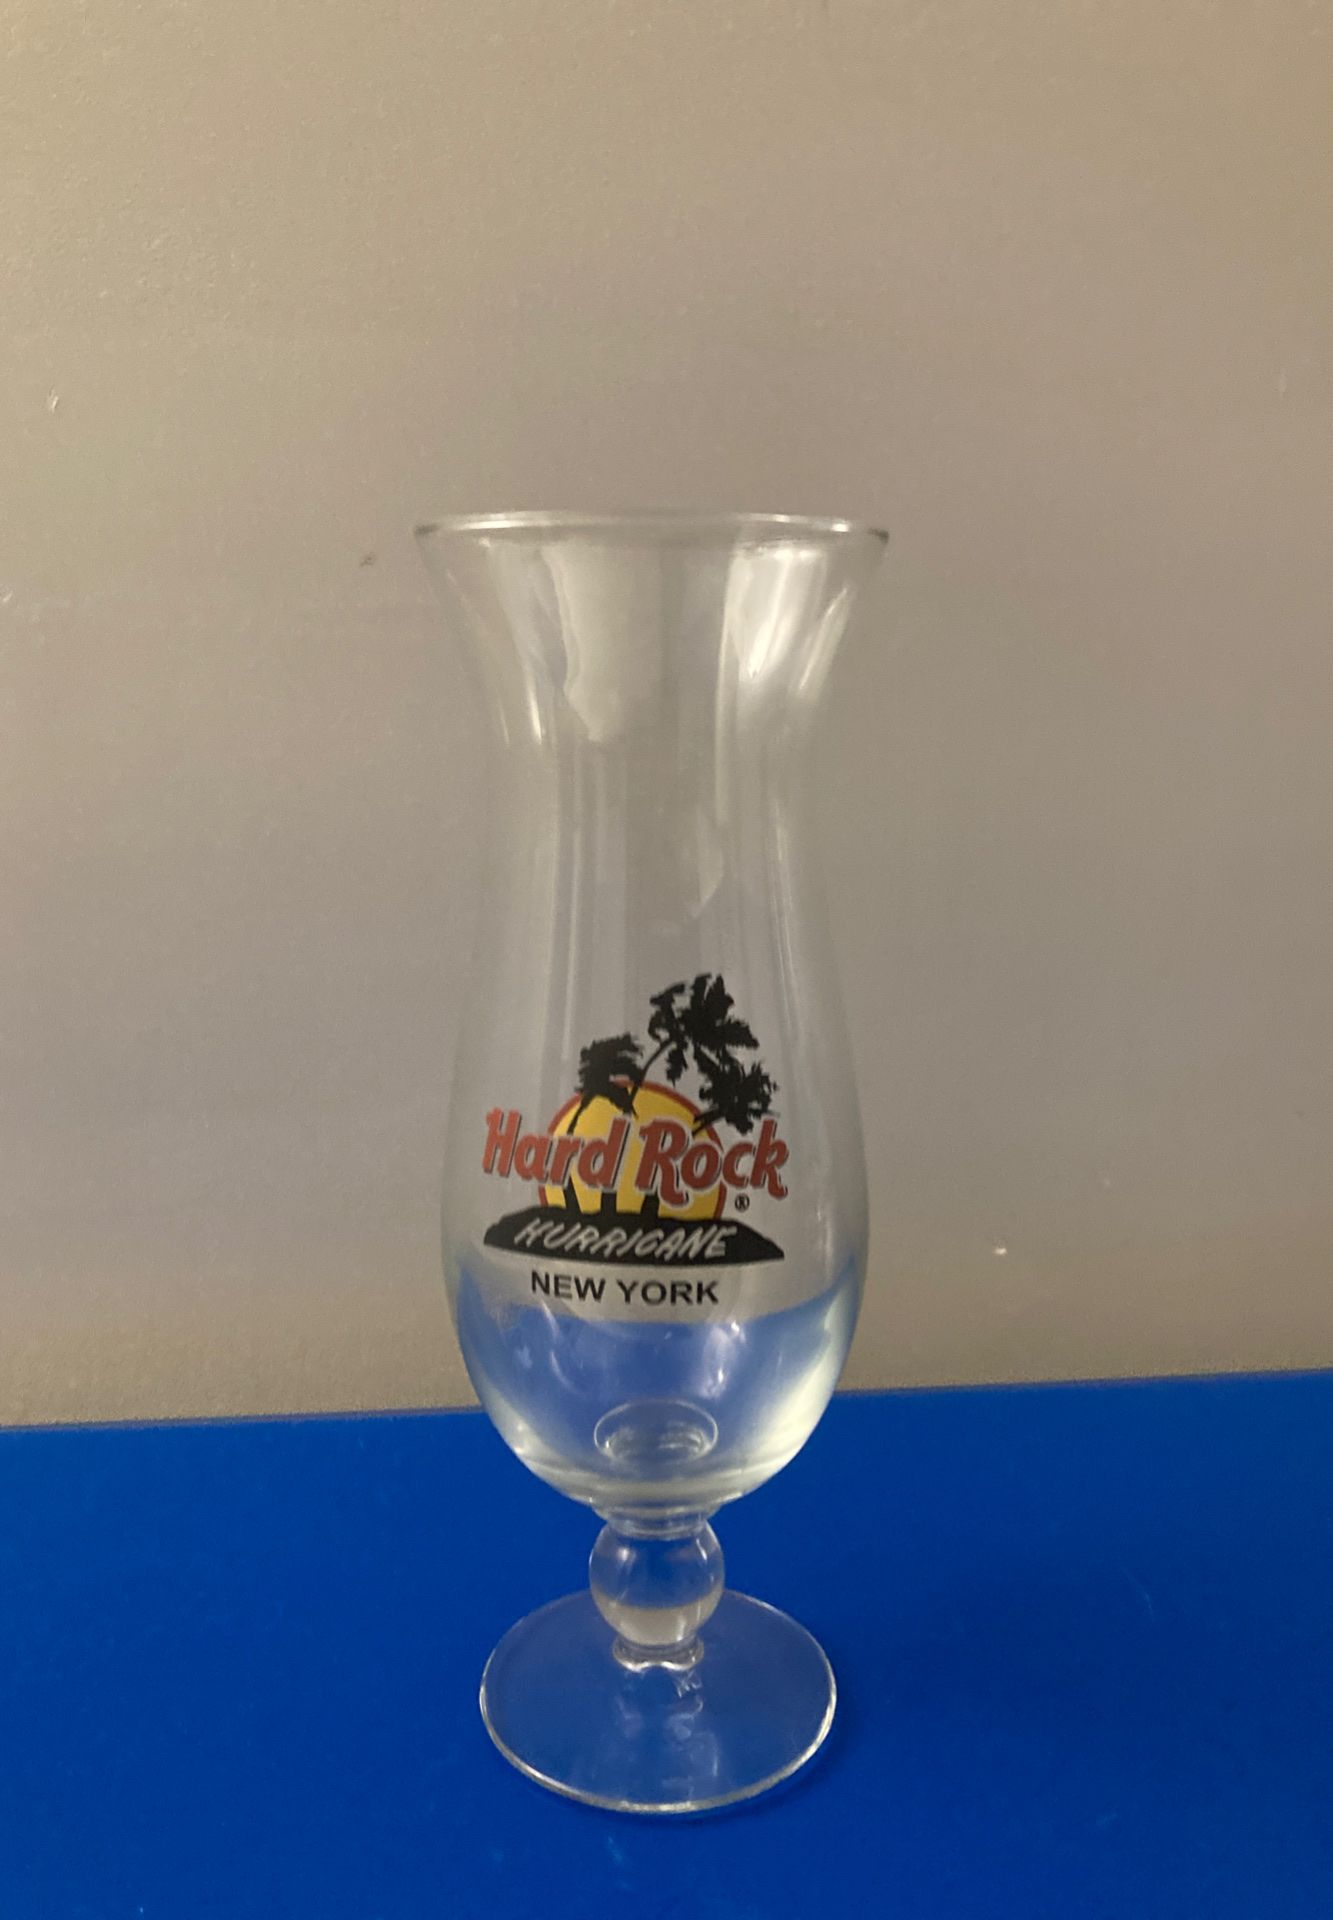 Hard Rock Cafe Hurricane New York Cocktail glass